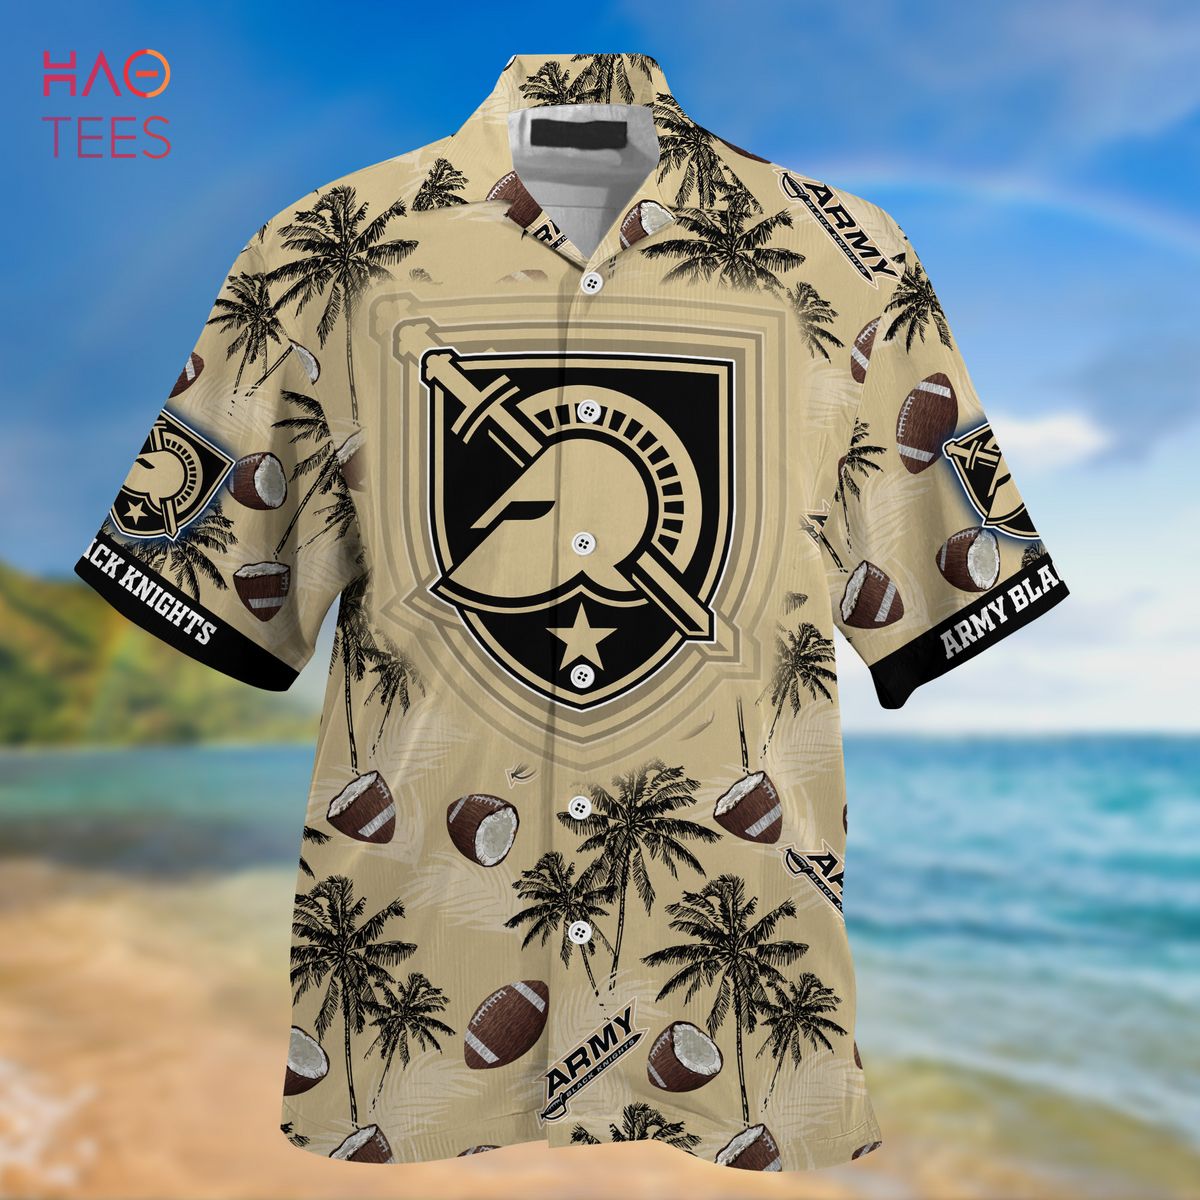 [TRENDING] Army Black Knights Hawaiian Shirt, New Gift For Summer